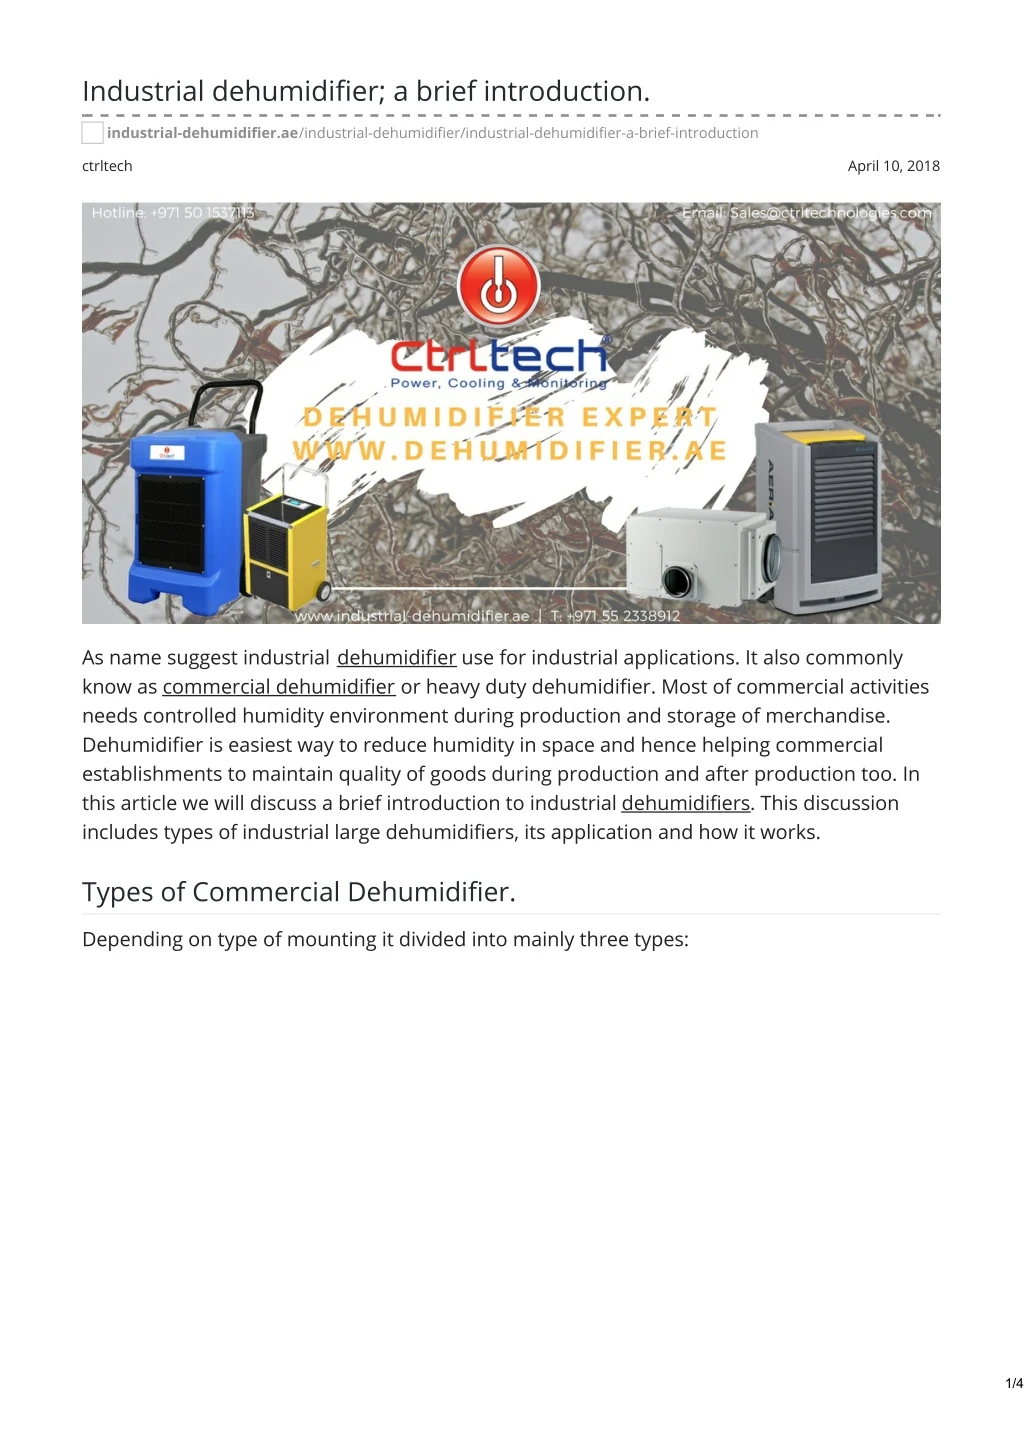 industrial dehumidifier a brief introduction